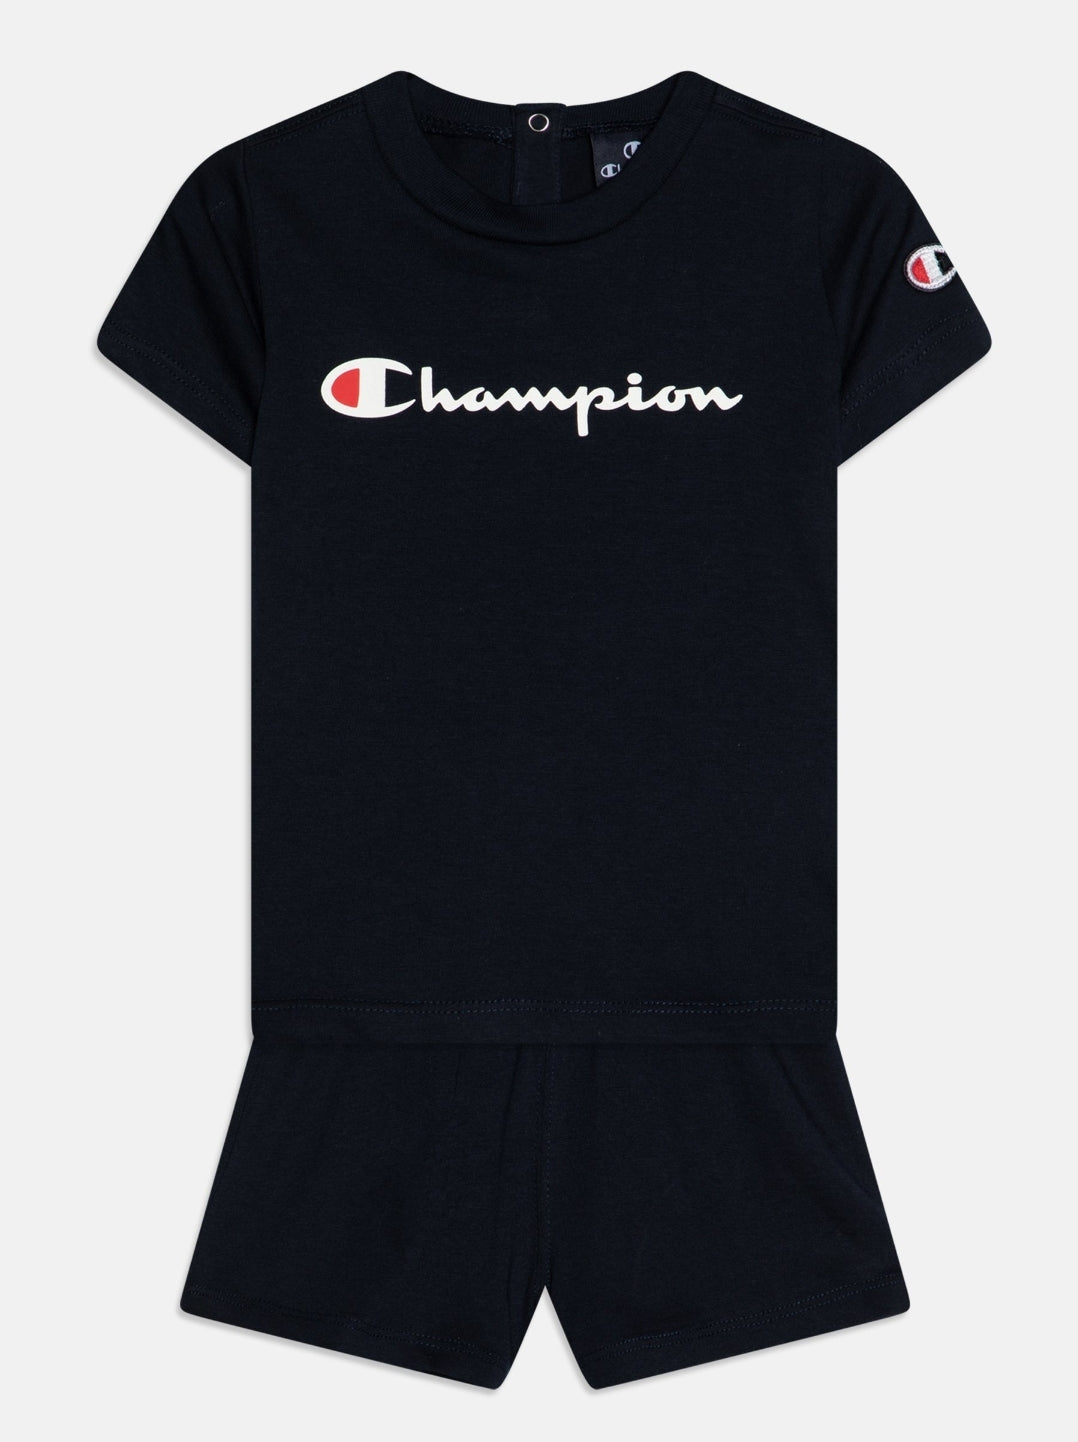 Champion Bébé T-shirt and dark navy blue shorts and shorts